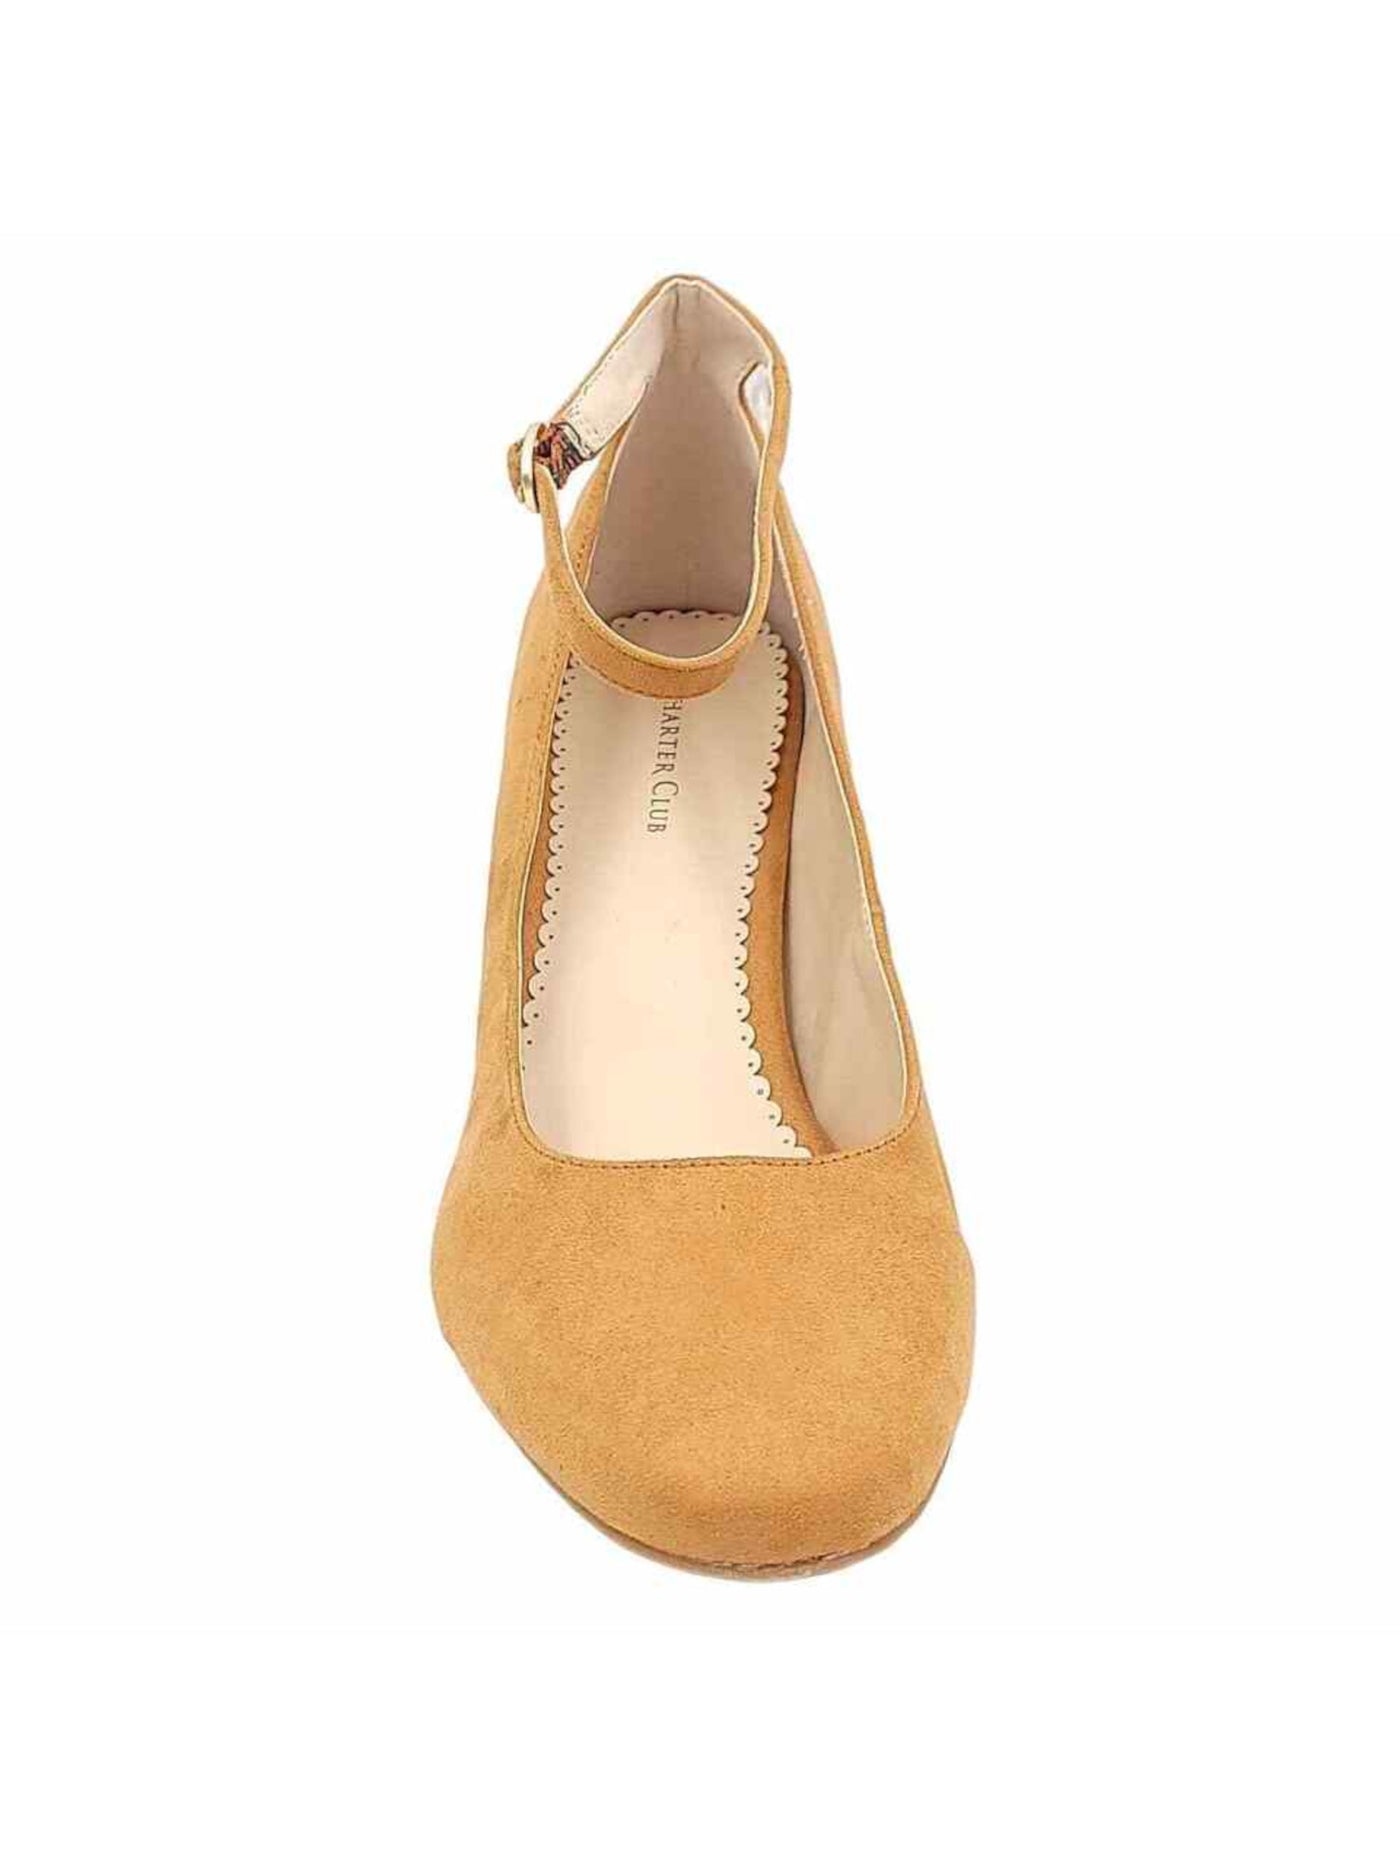 CHARTER CLUB Womens Beige Padded Adjustable Ankle Strap Francina Almond Toe Block Heel Buckle Dress Pumps Shoes 9.5 M